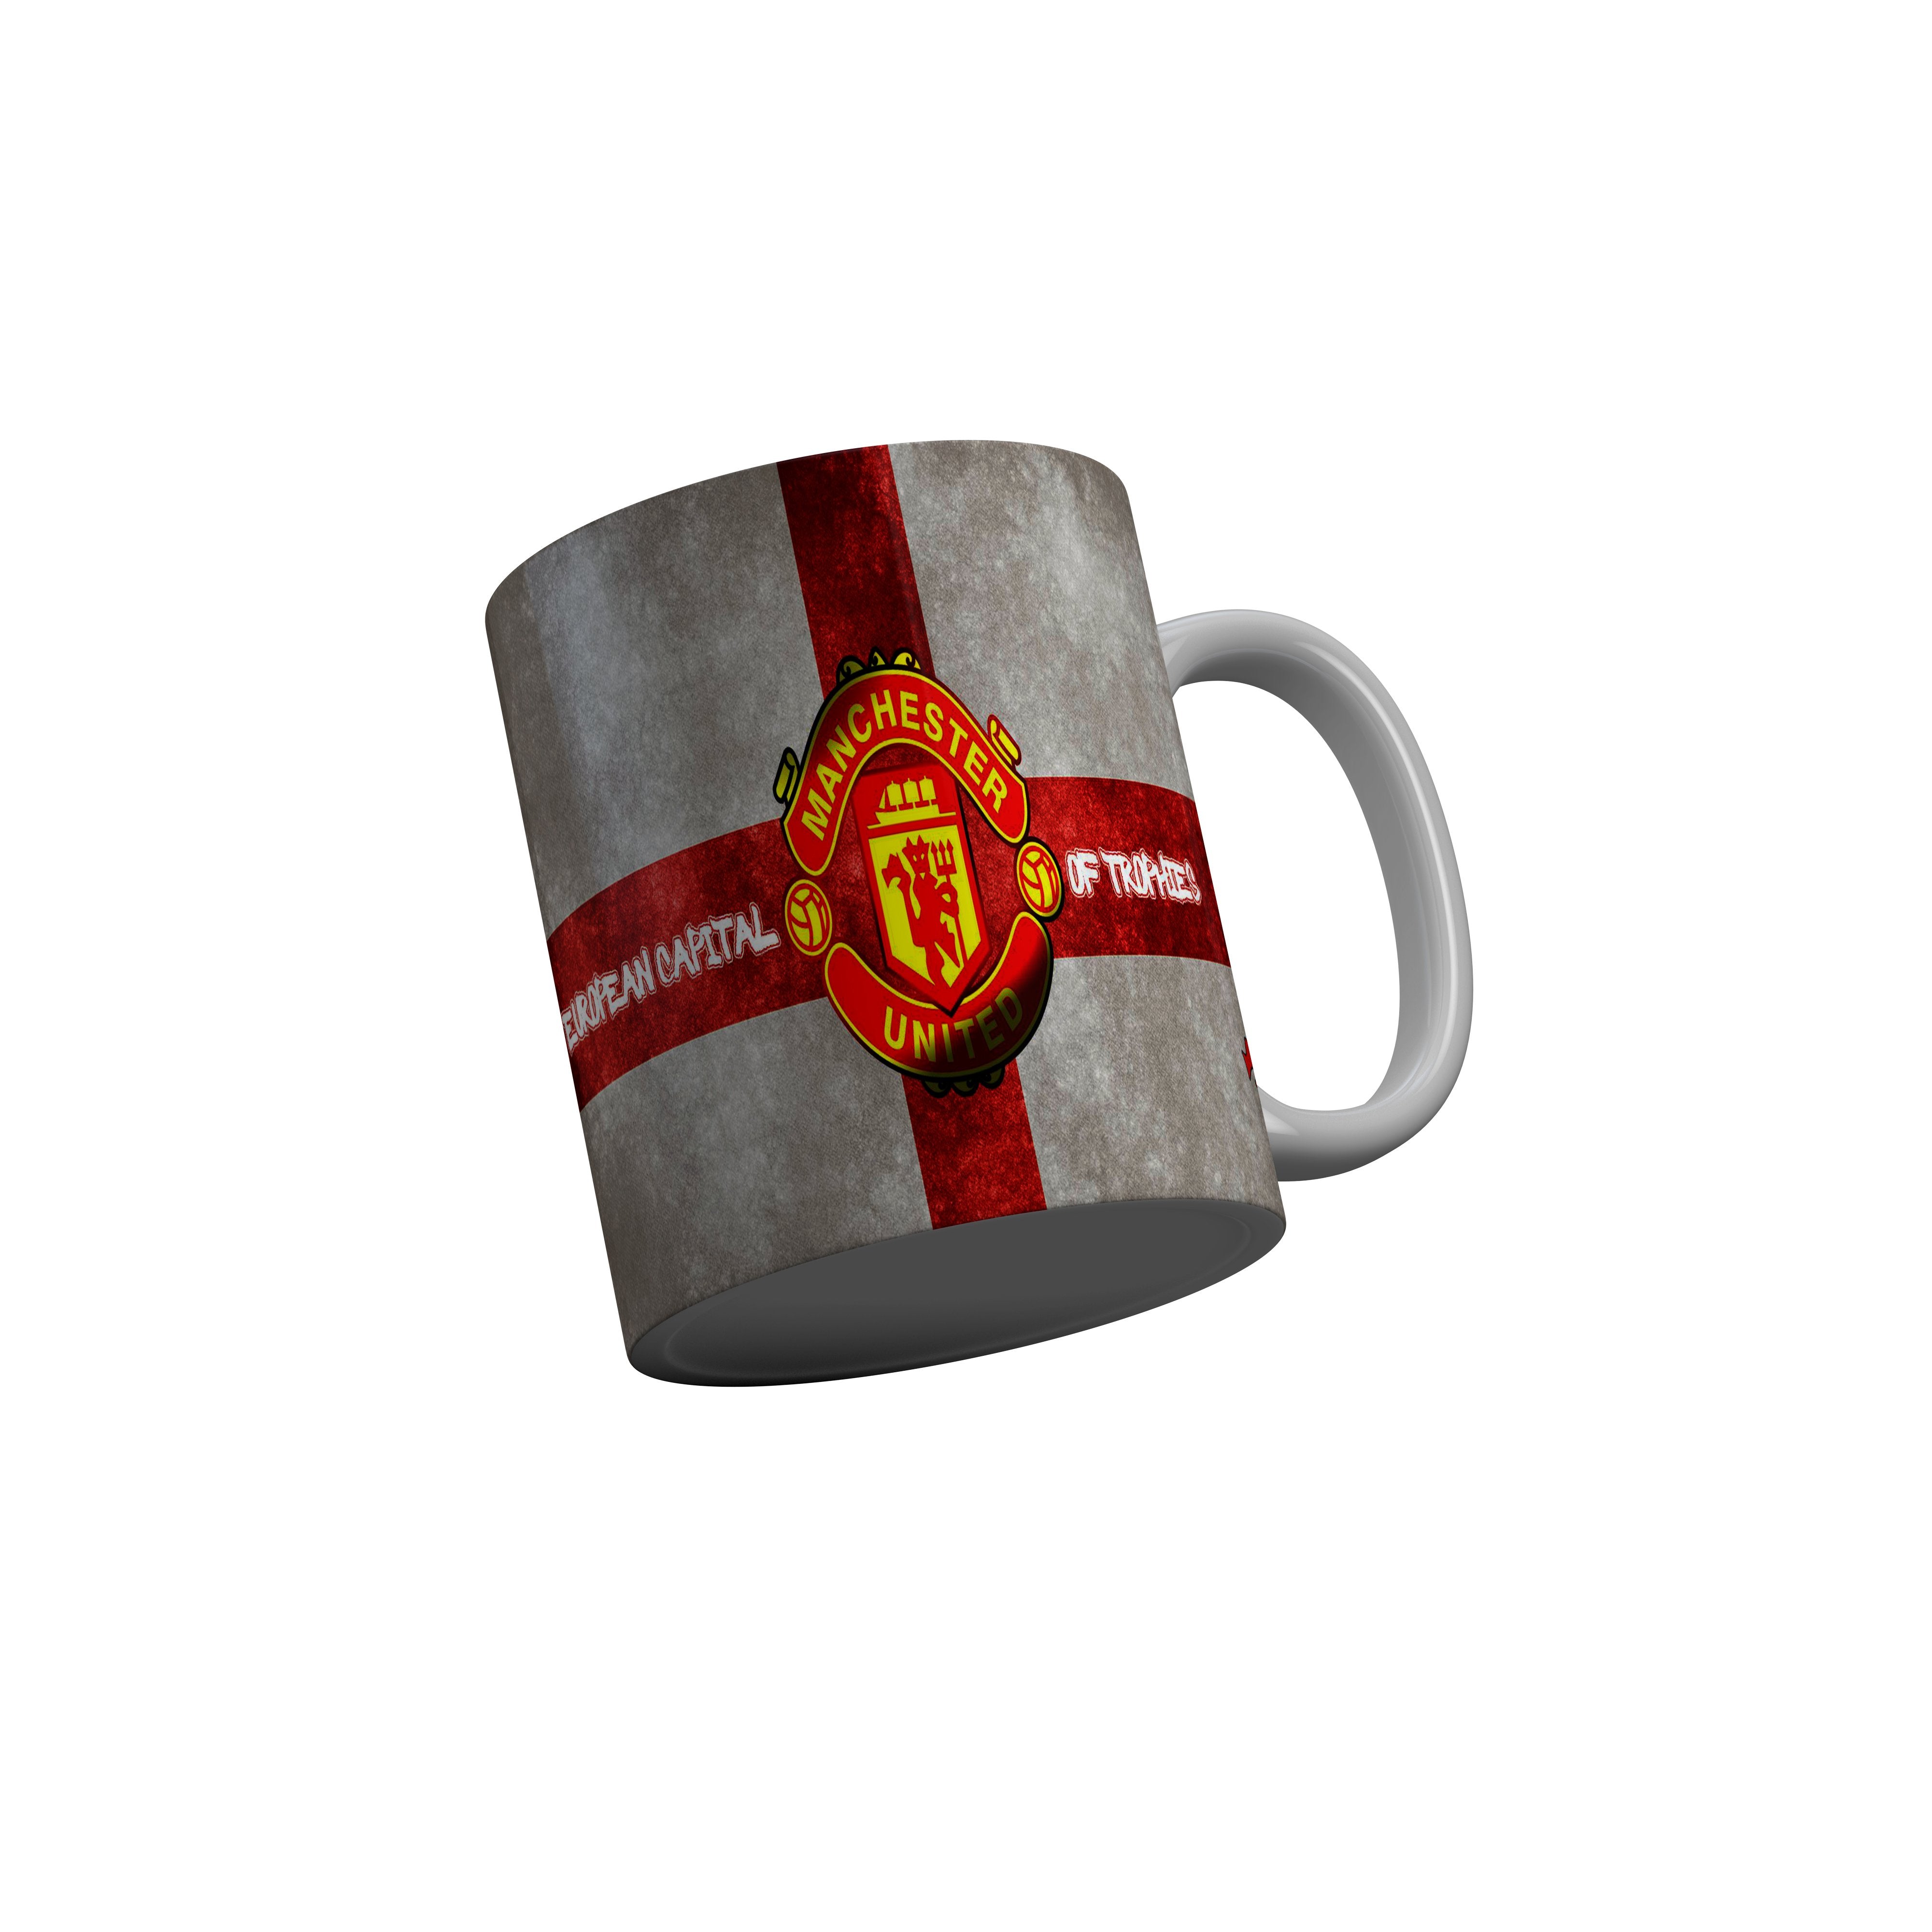 FashionRazor Manchester United Football White Ceramic Coffee Mug